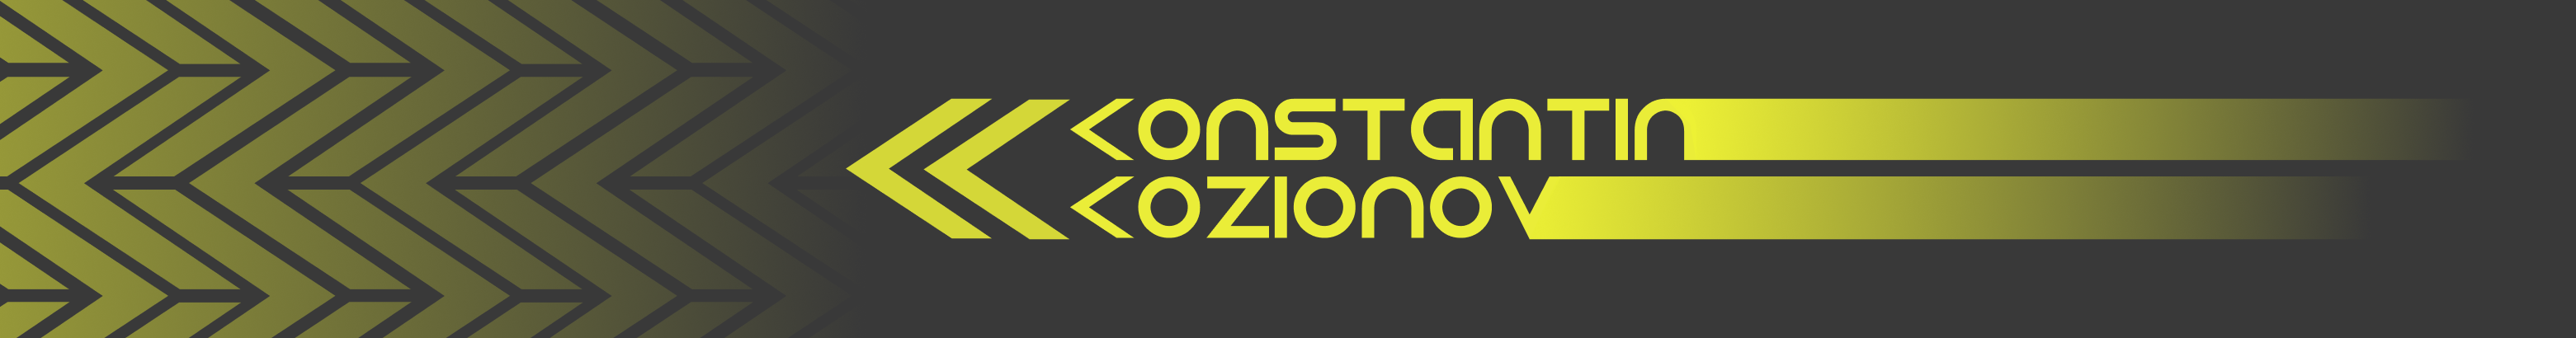 Bannière de profil de Konstantin Kozionov